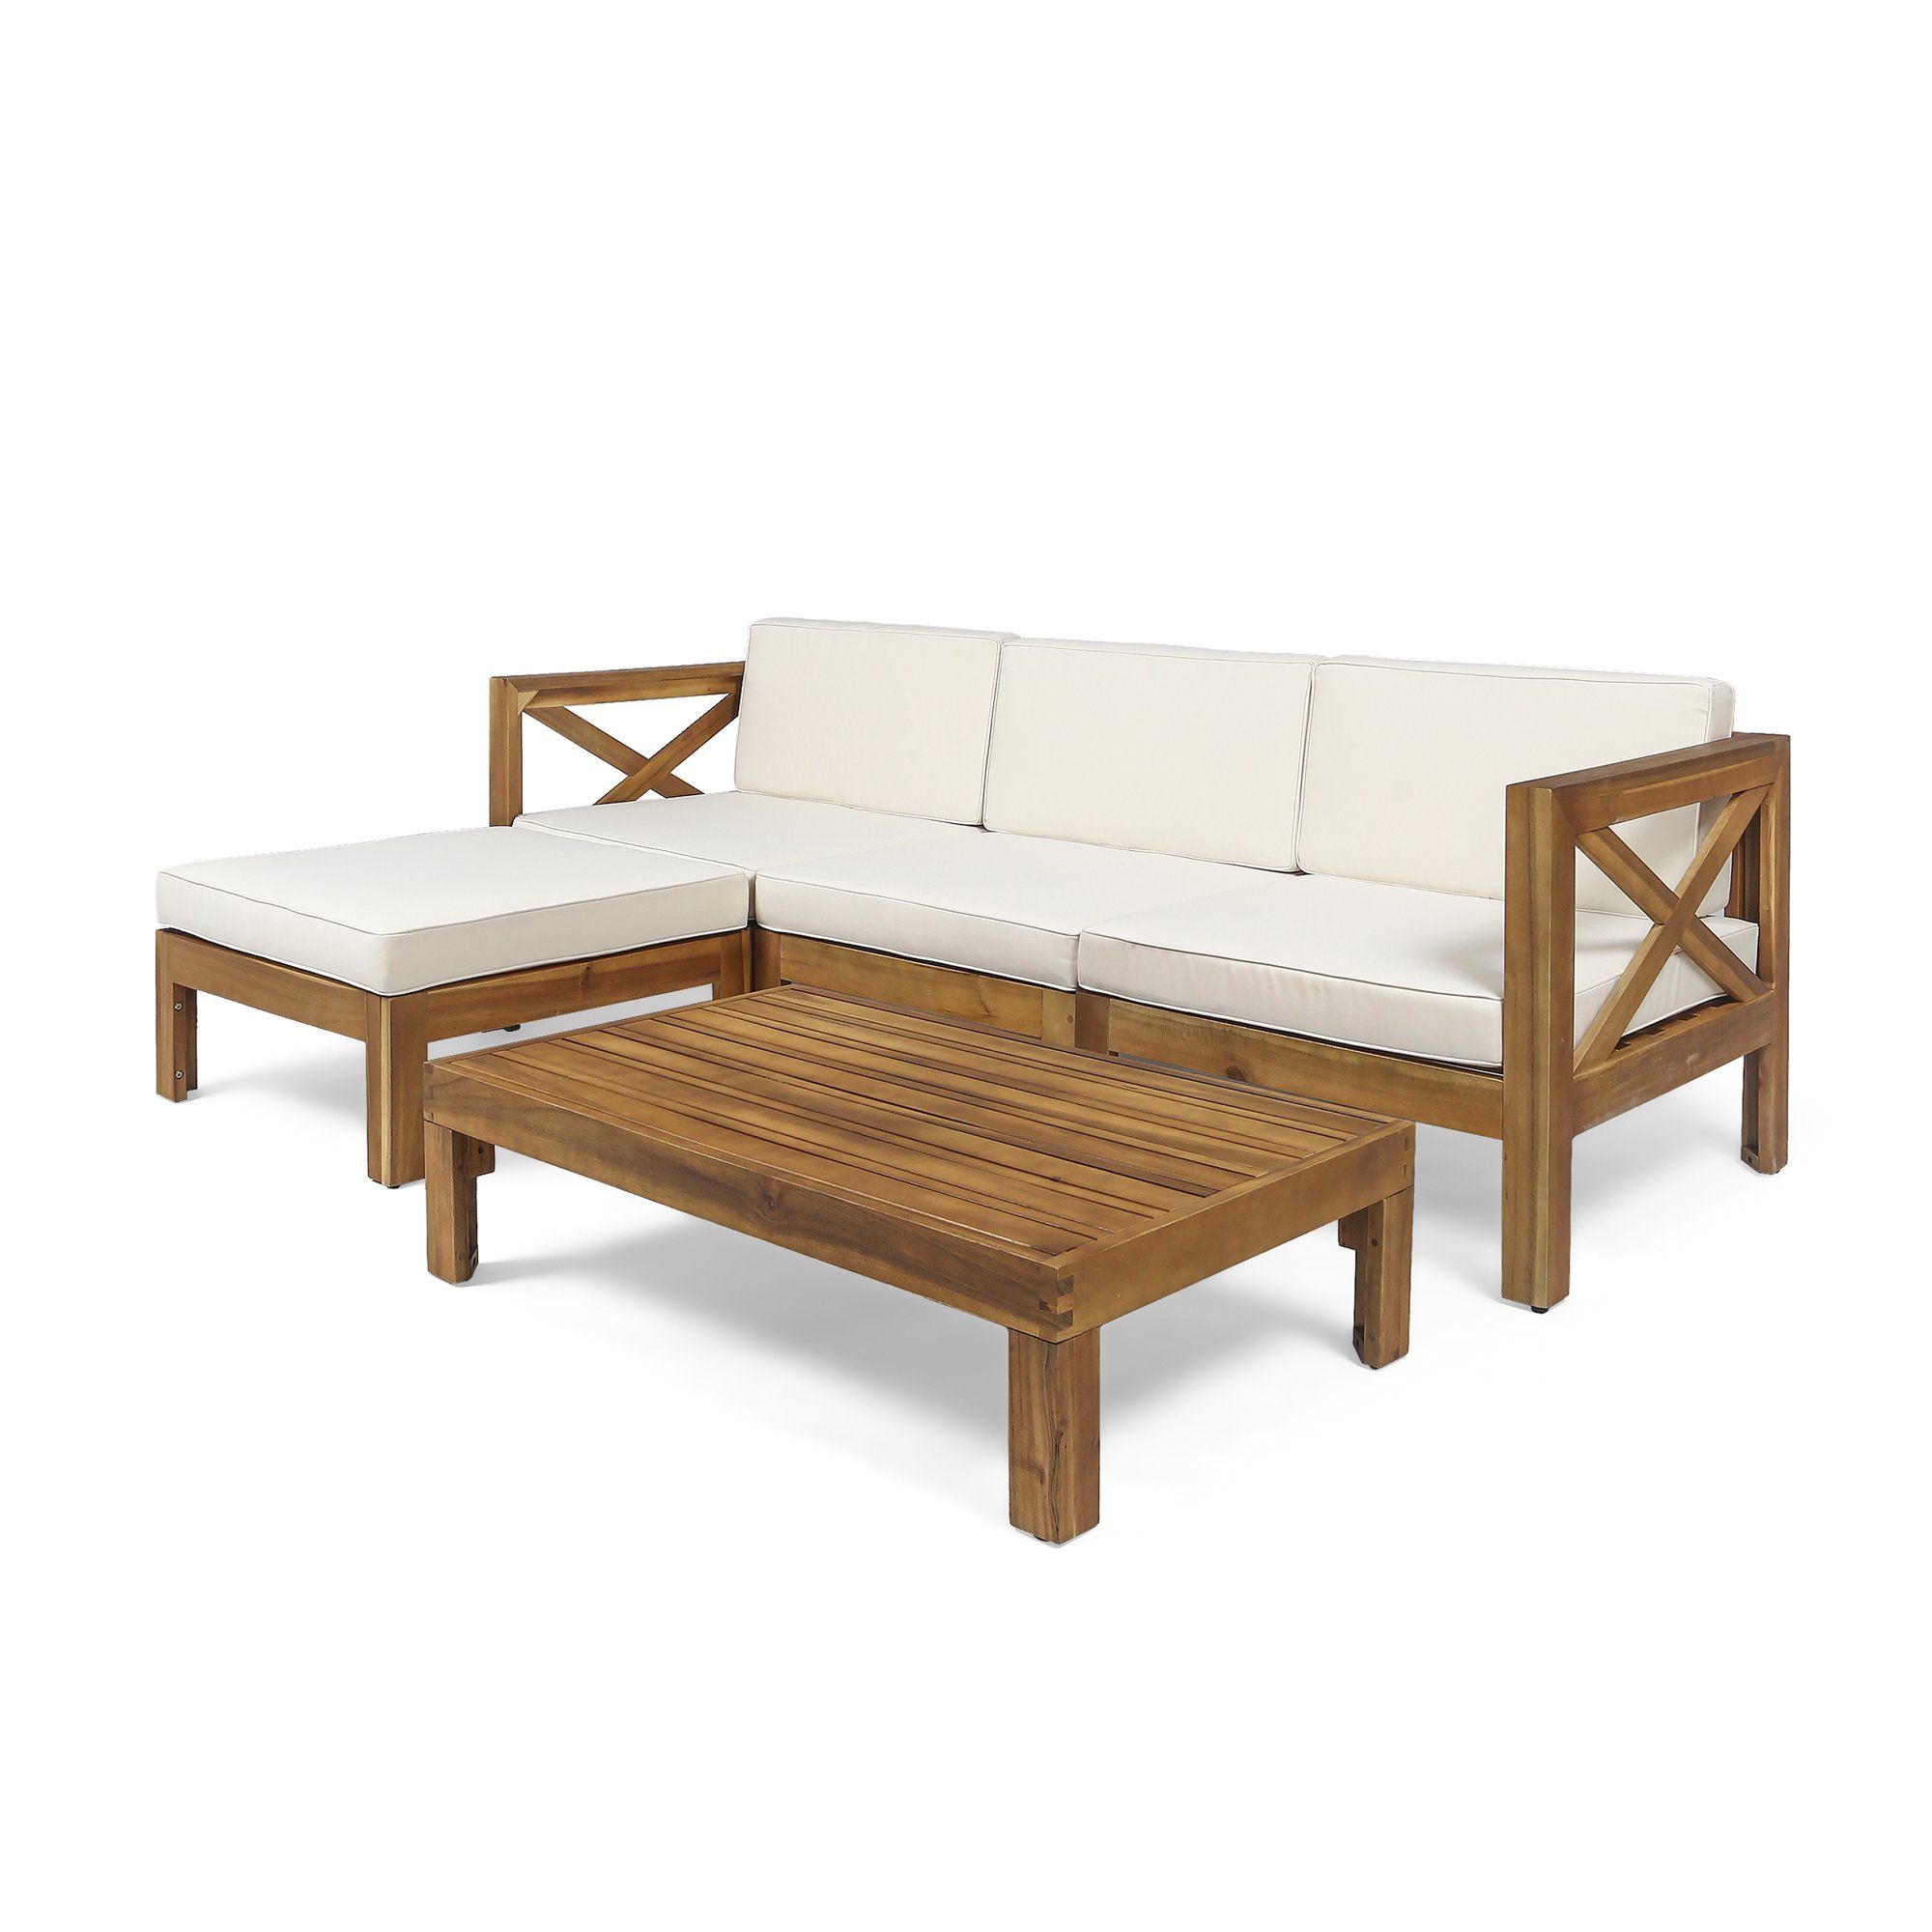 Mamie Outdoor Acacia Wood 5 Piece Sofa Set, Teak and Beige | Walmart (US)